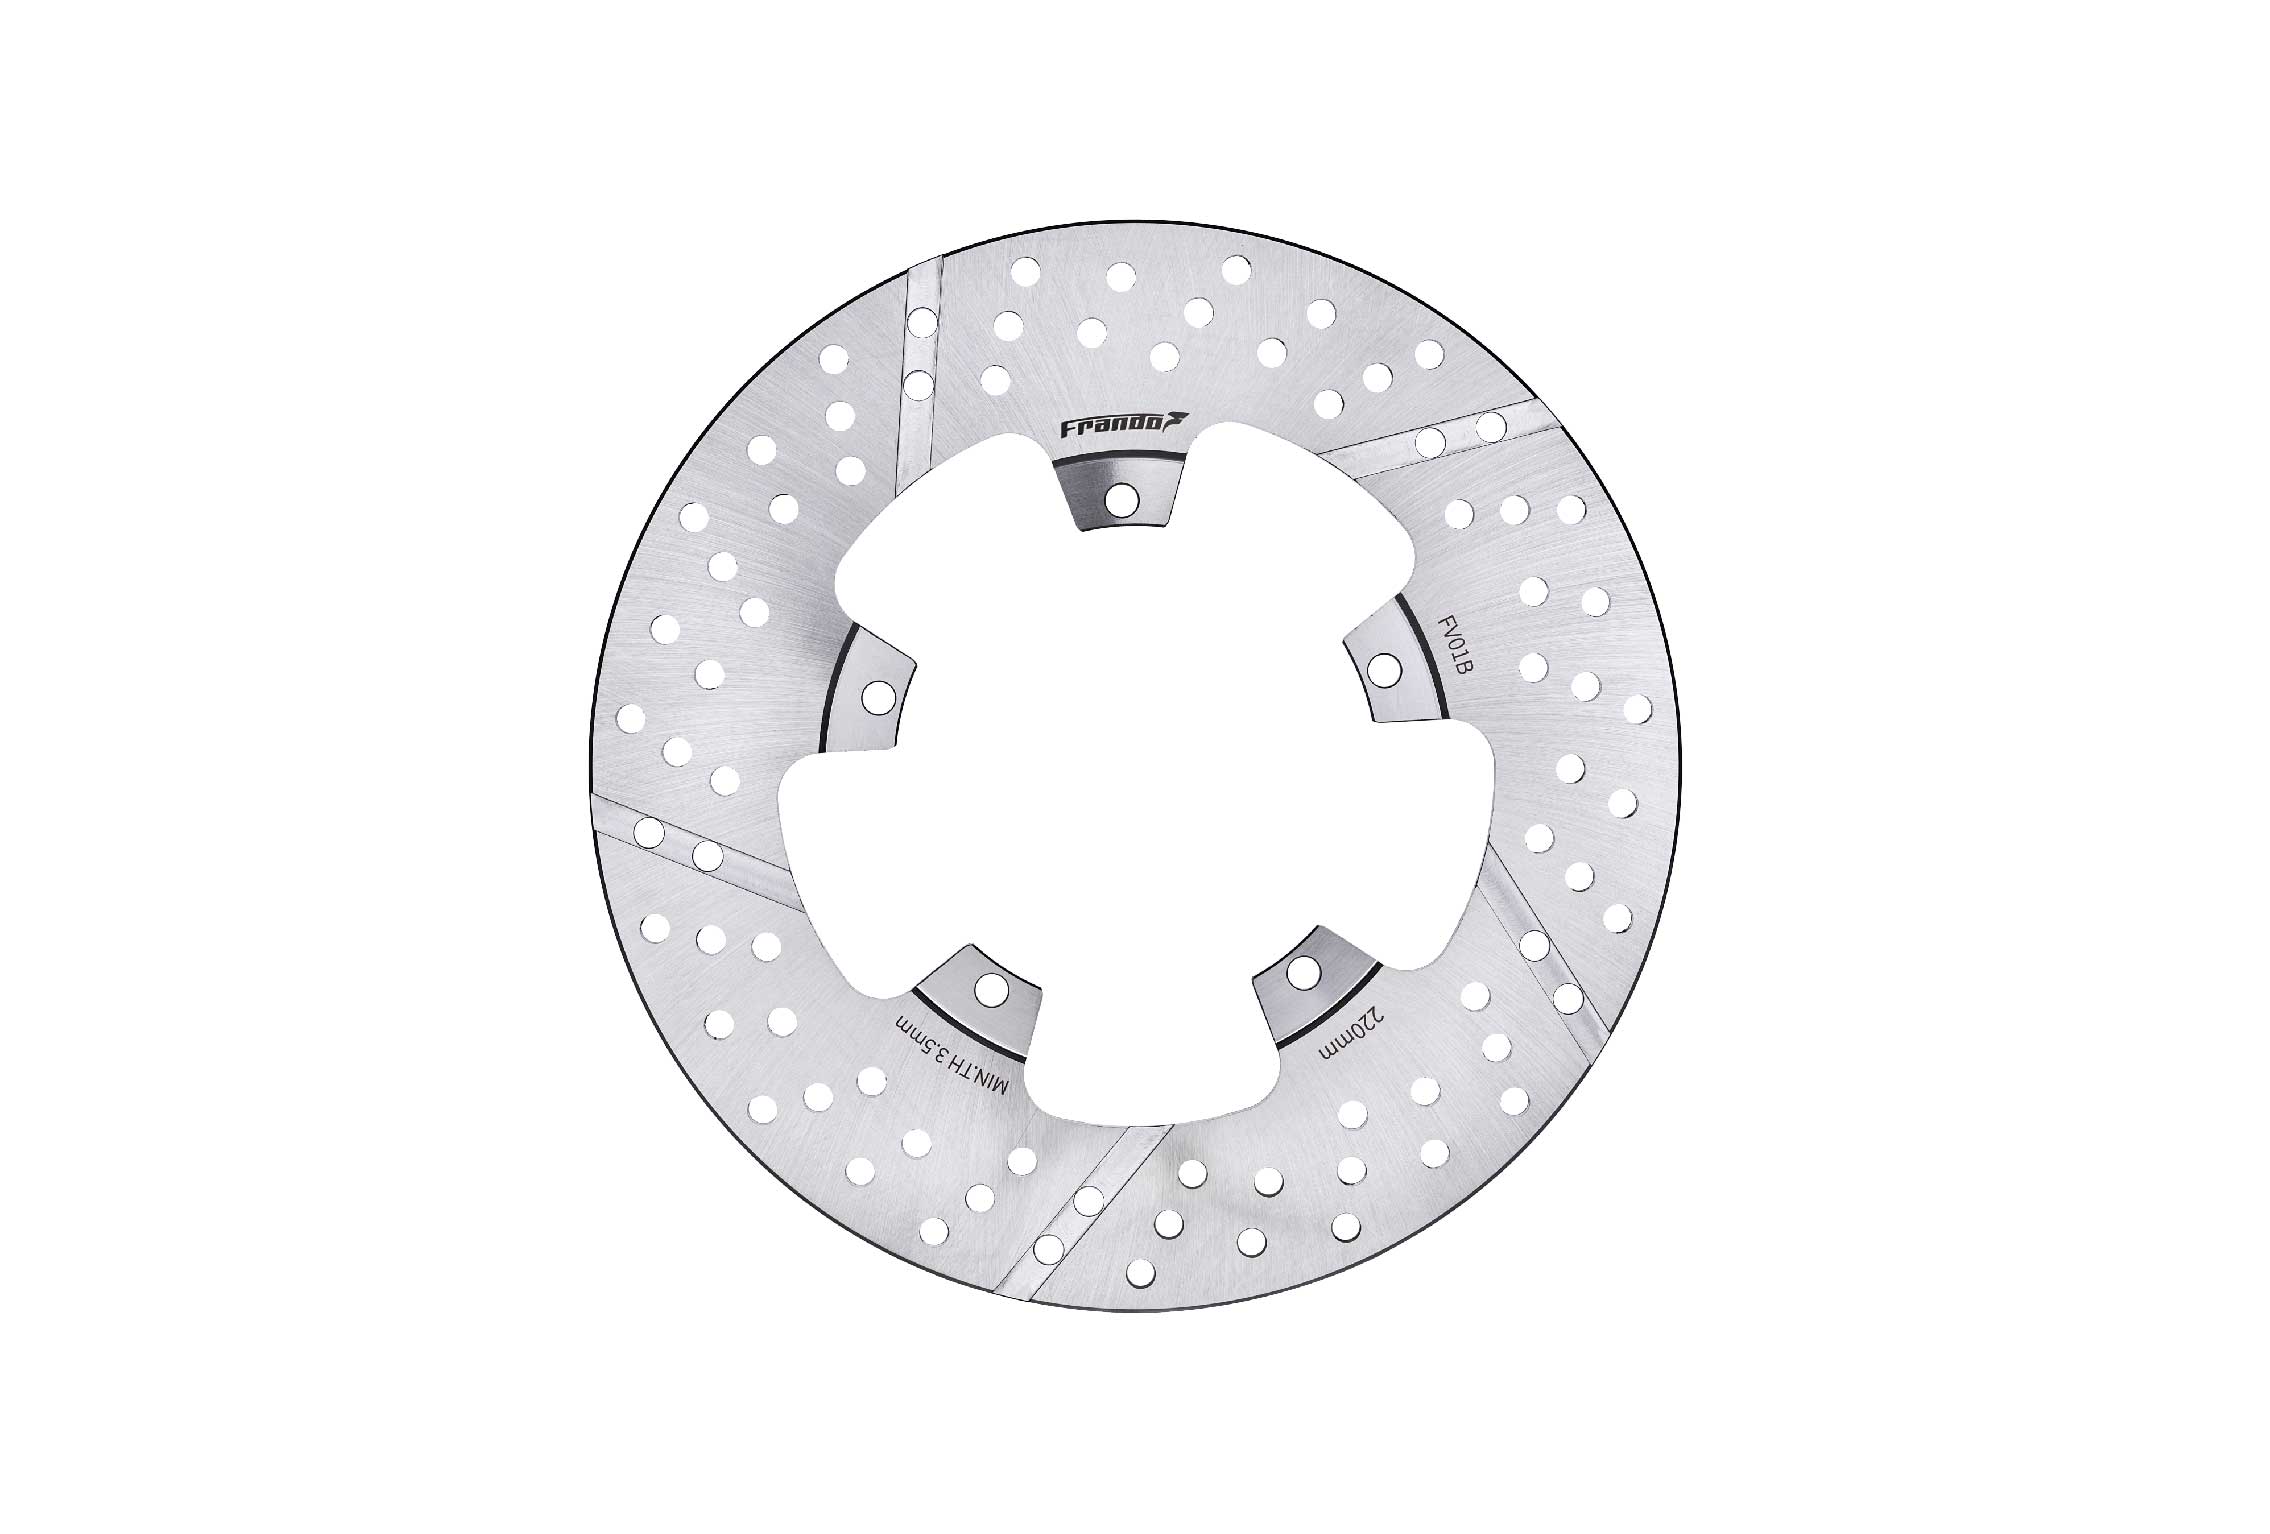 FV01B 5 Attachment Holes Fixed Disc